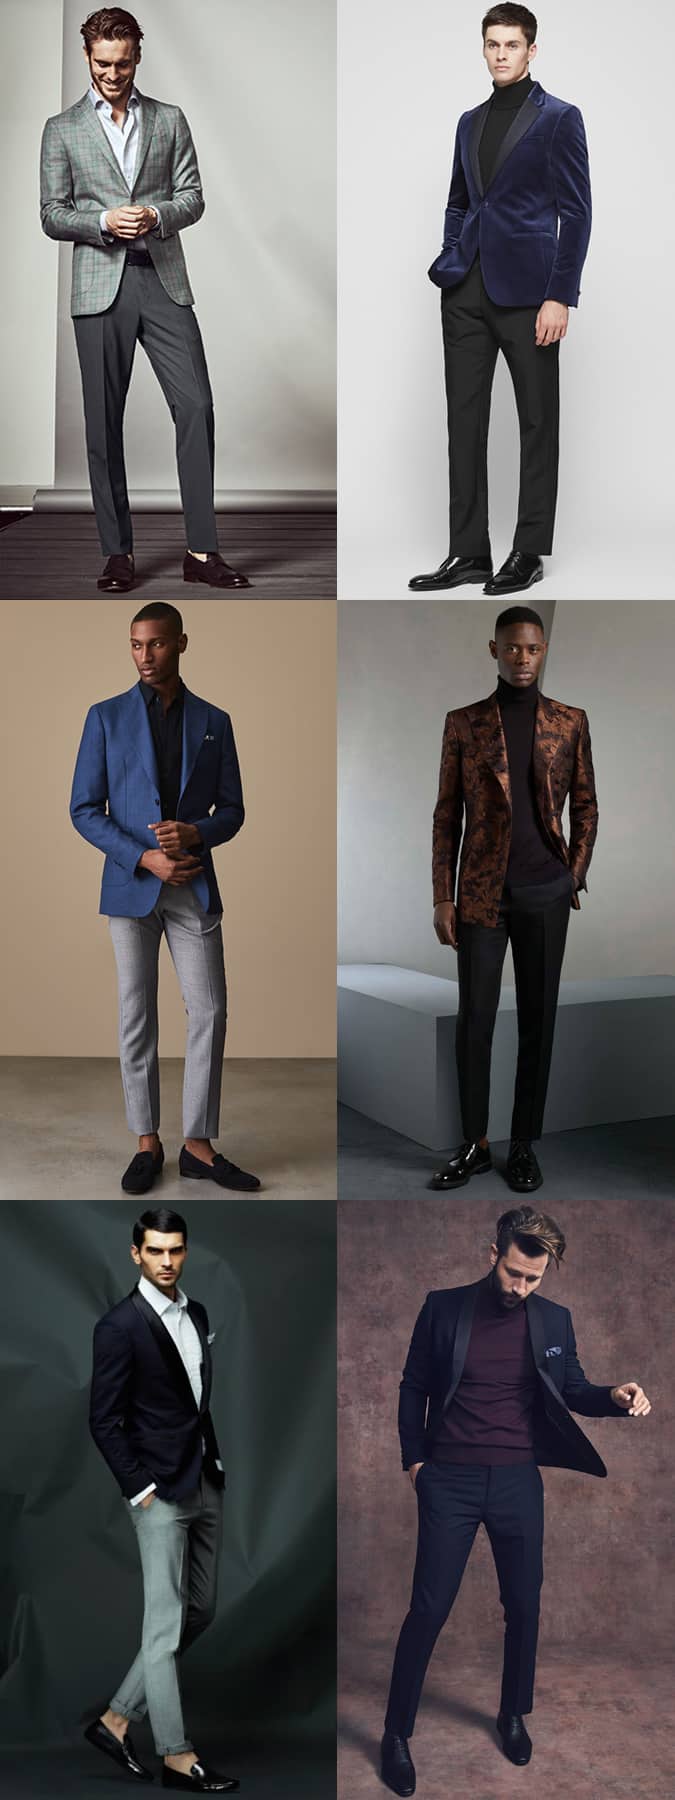 Men's Cocktail Attire Outfit Inspiration